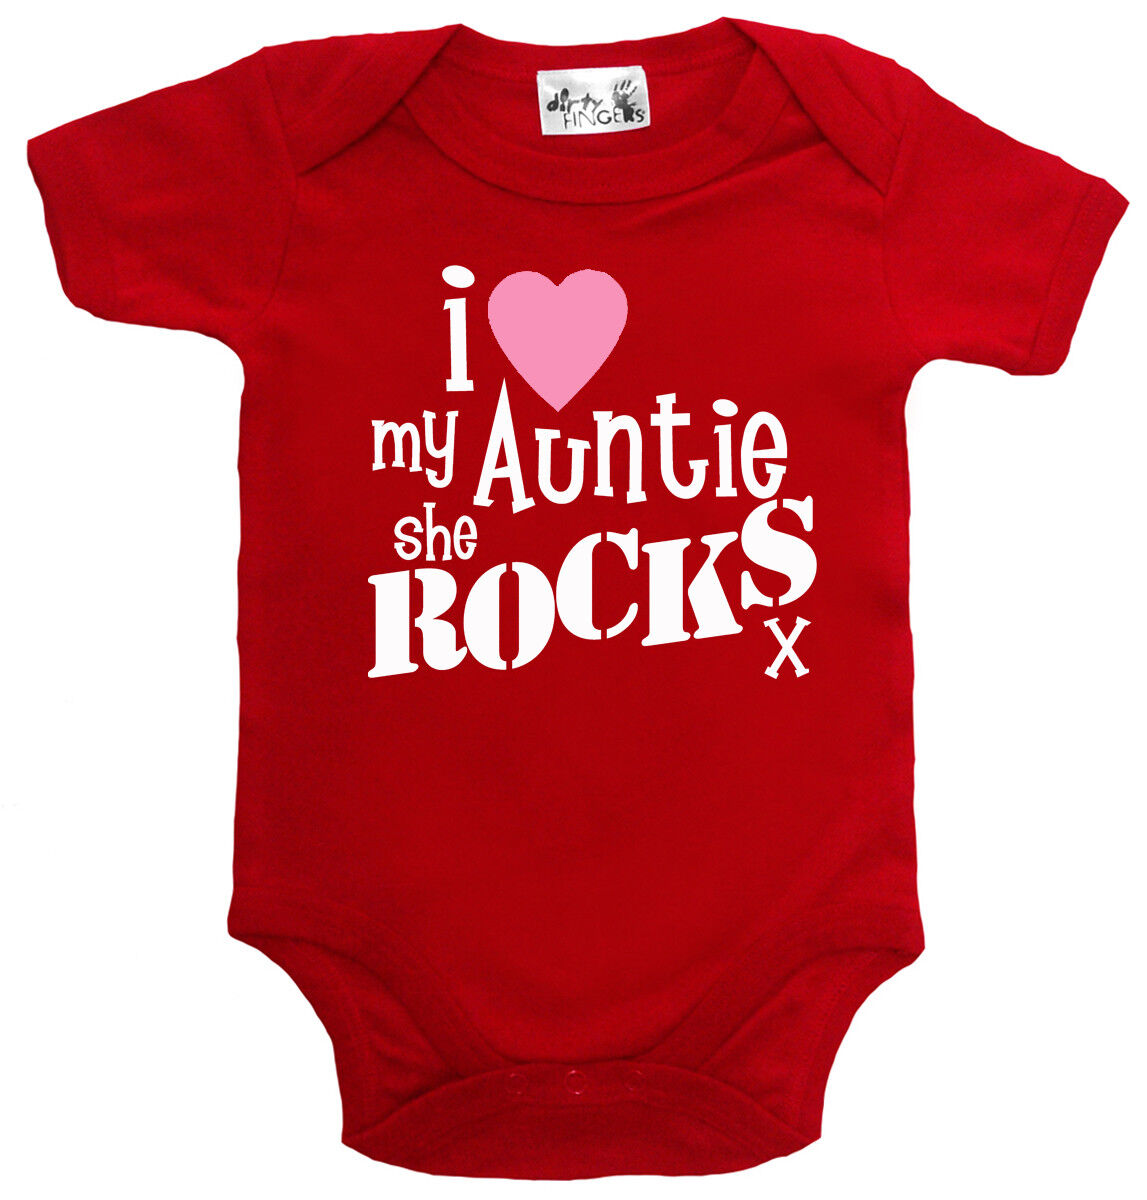 Baby tante Body /"J/' aime ma tata elle Rocks/" BABYGROW VEST nièce neveu